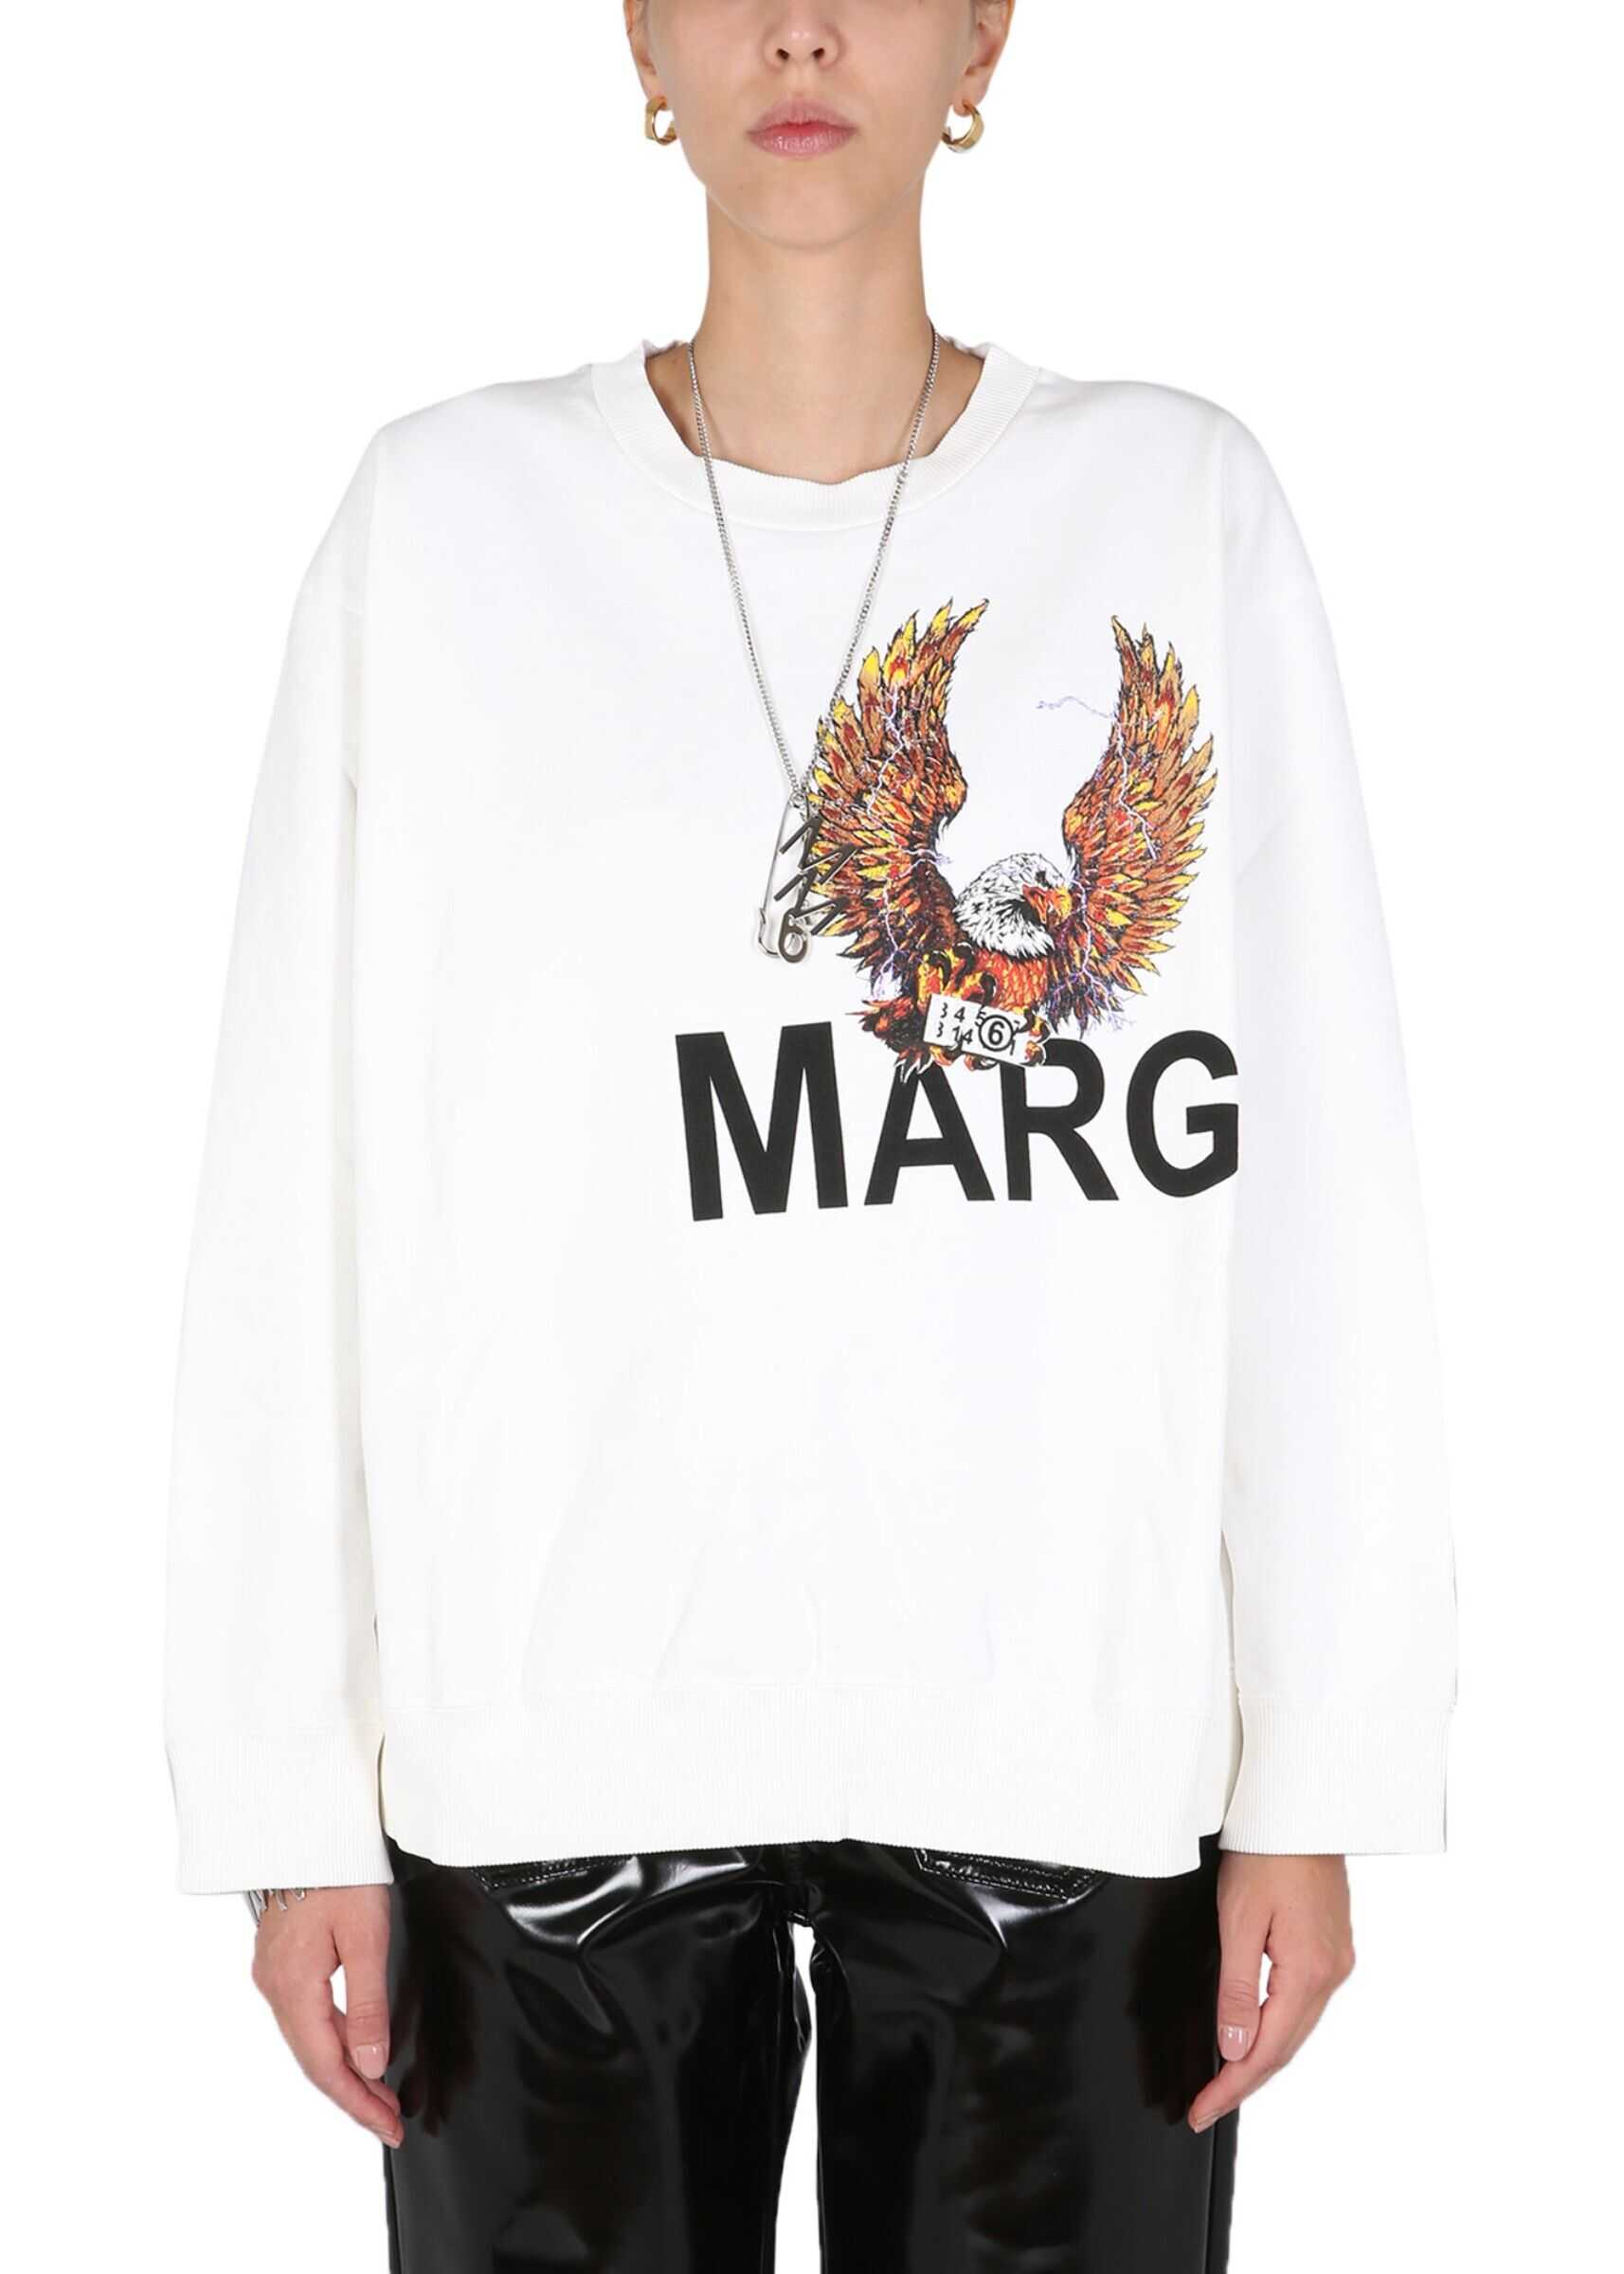 MM6 Maison Margiela "6 Eagle" Sweatshirt S52GU0141_S25337101 WHITE